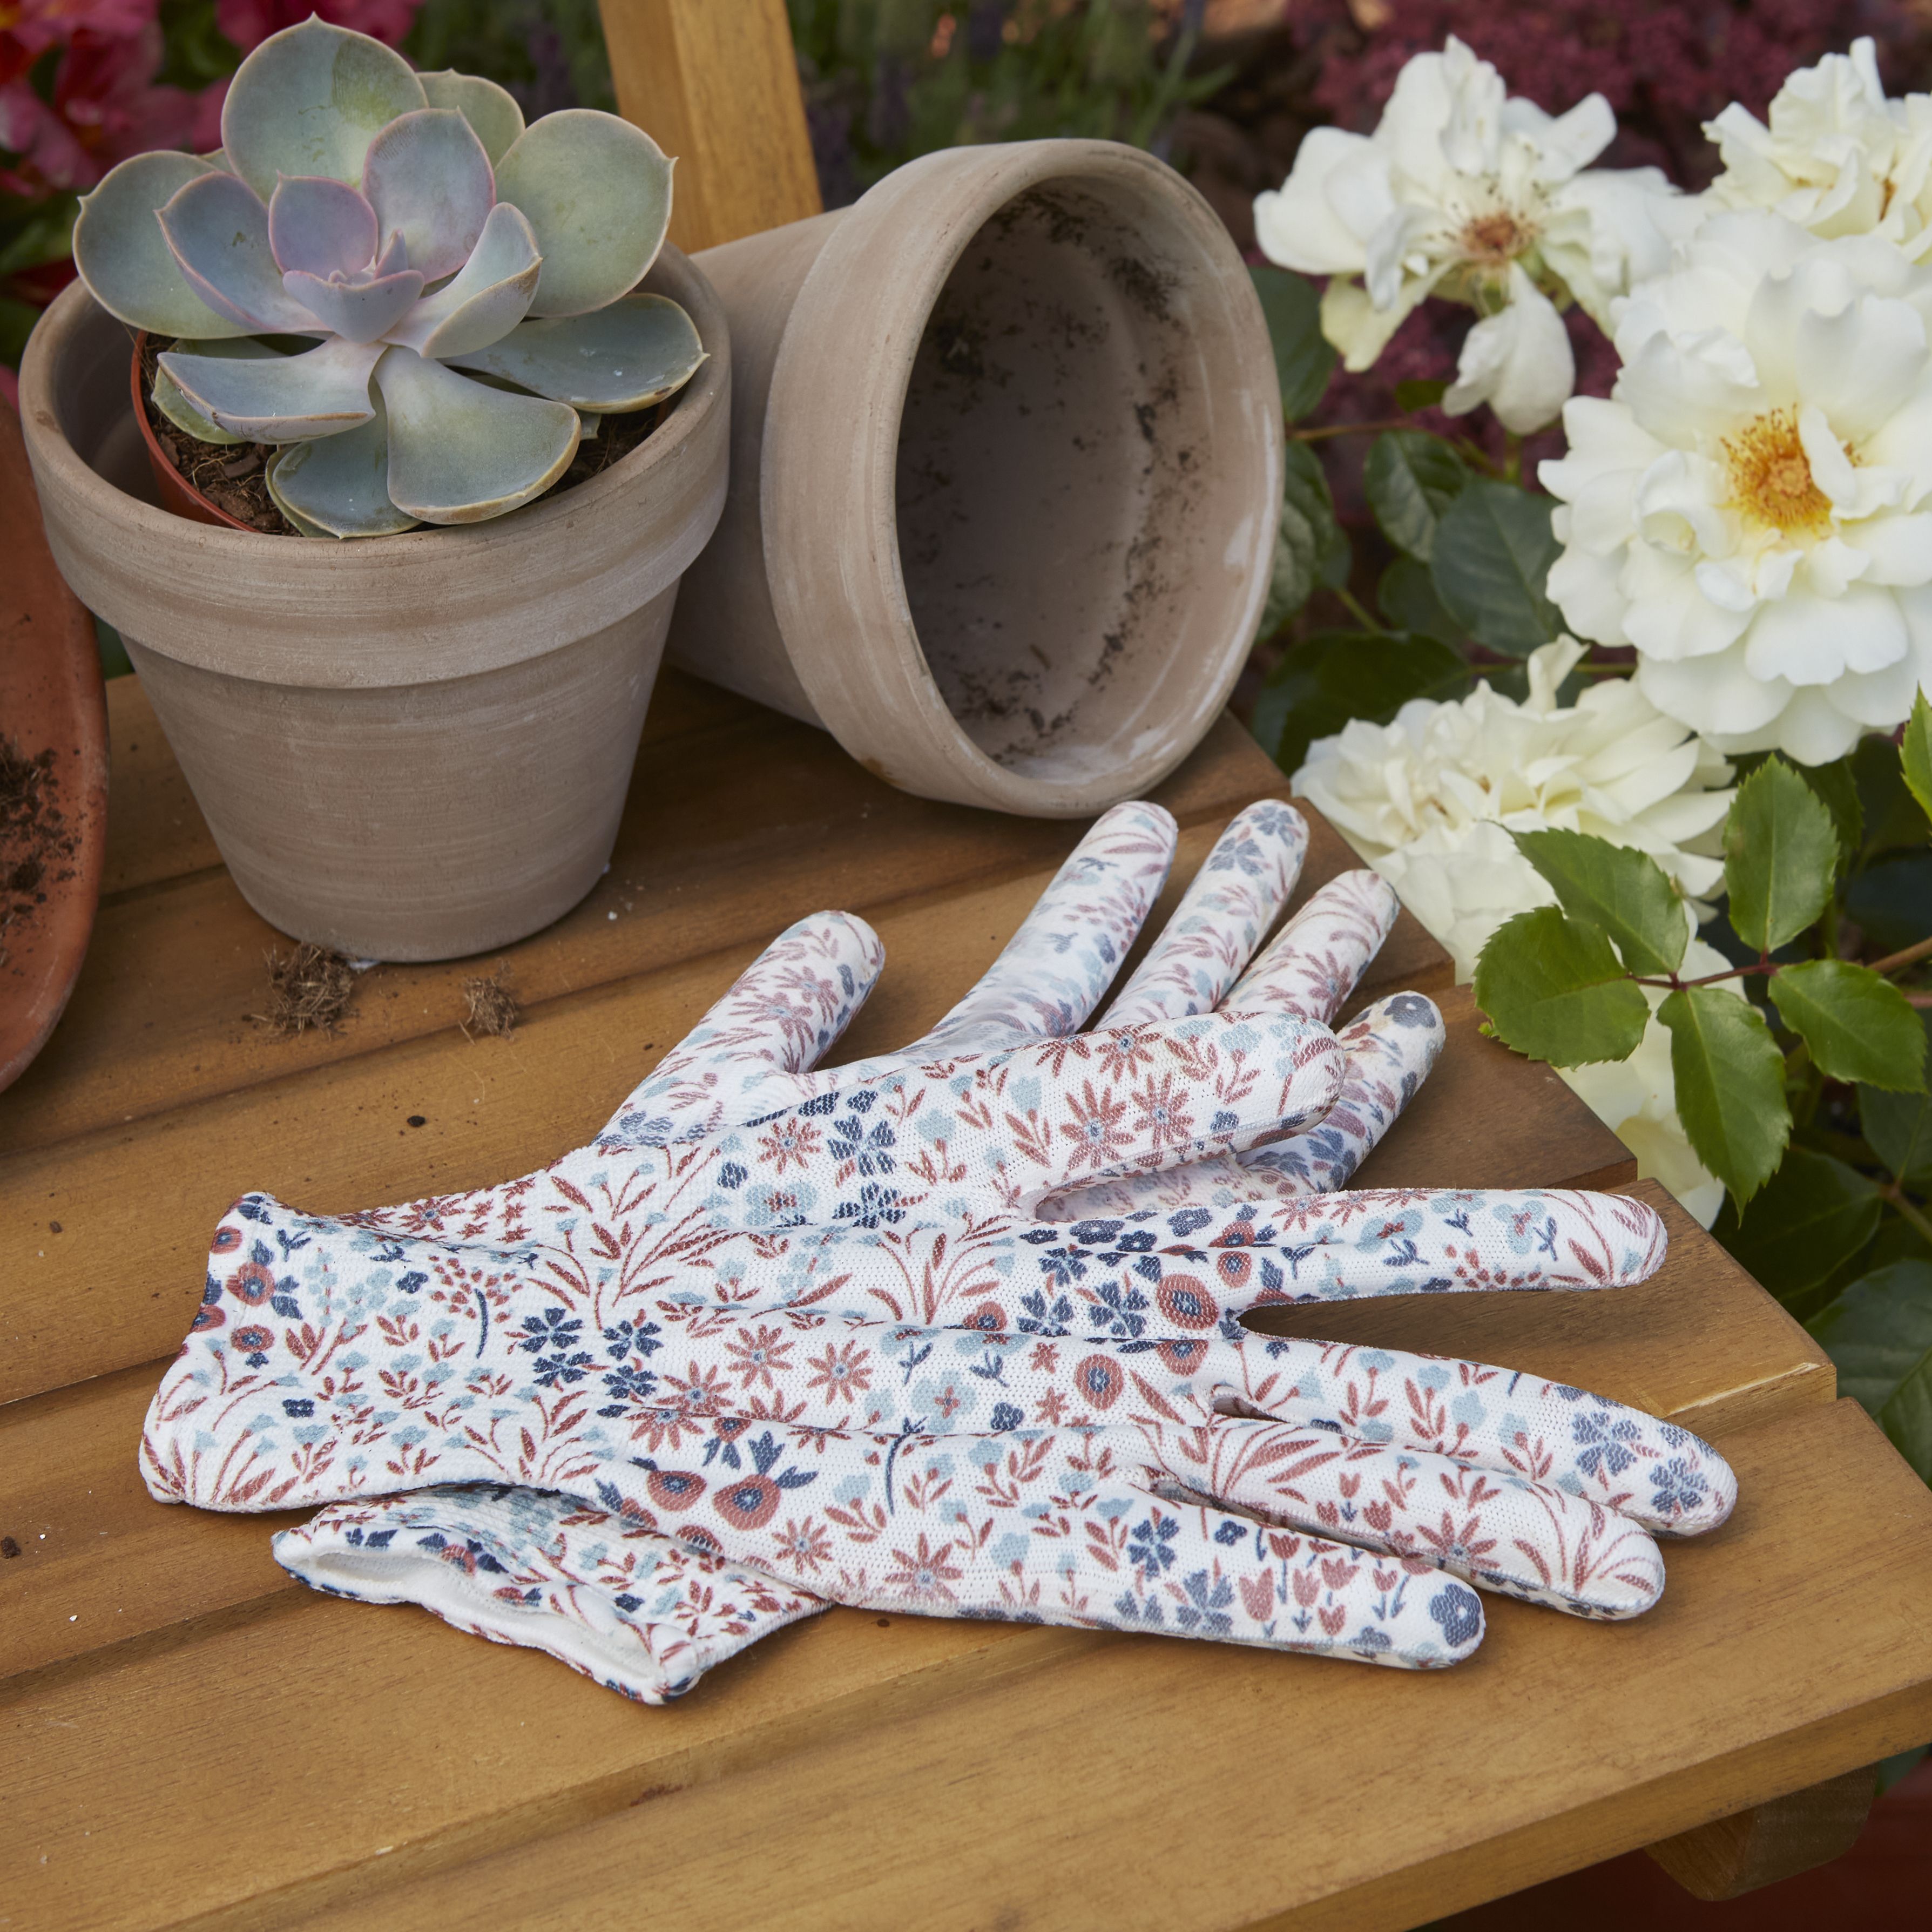 Verve Polyester & polyurethane Multi-colour Gardening gloves Medium, Pair